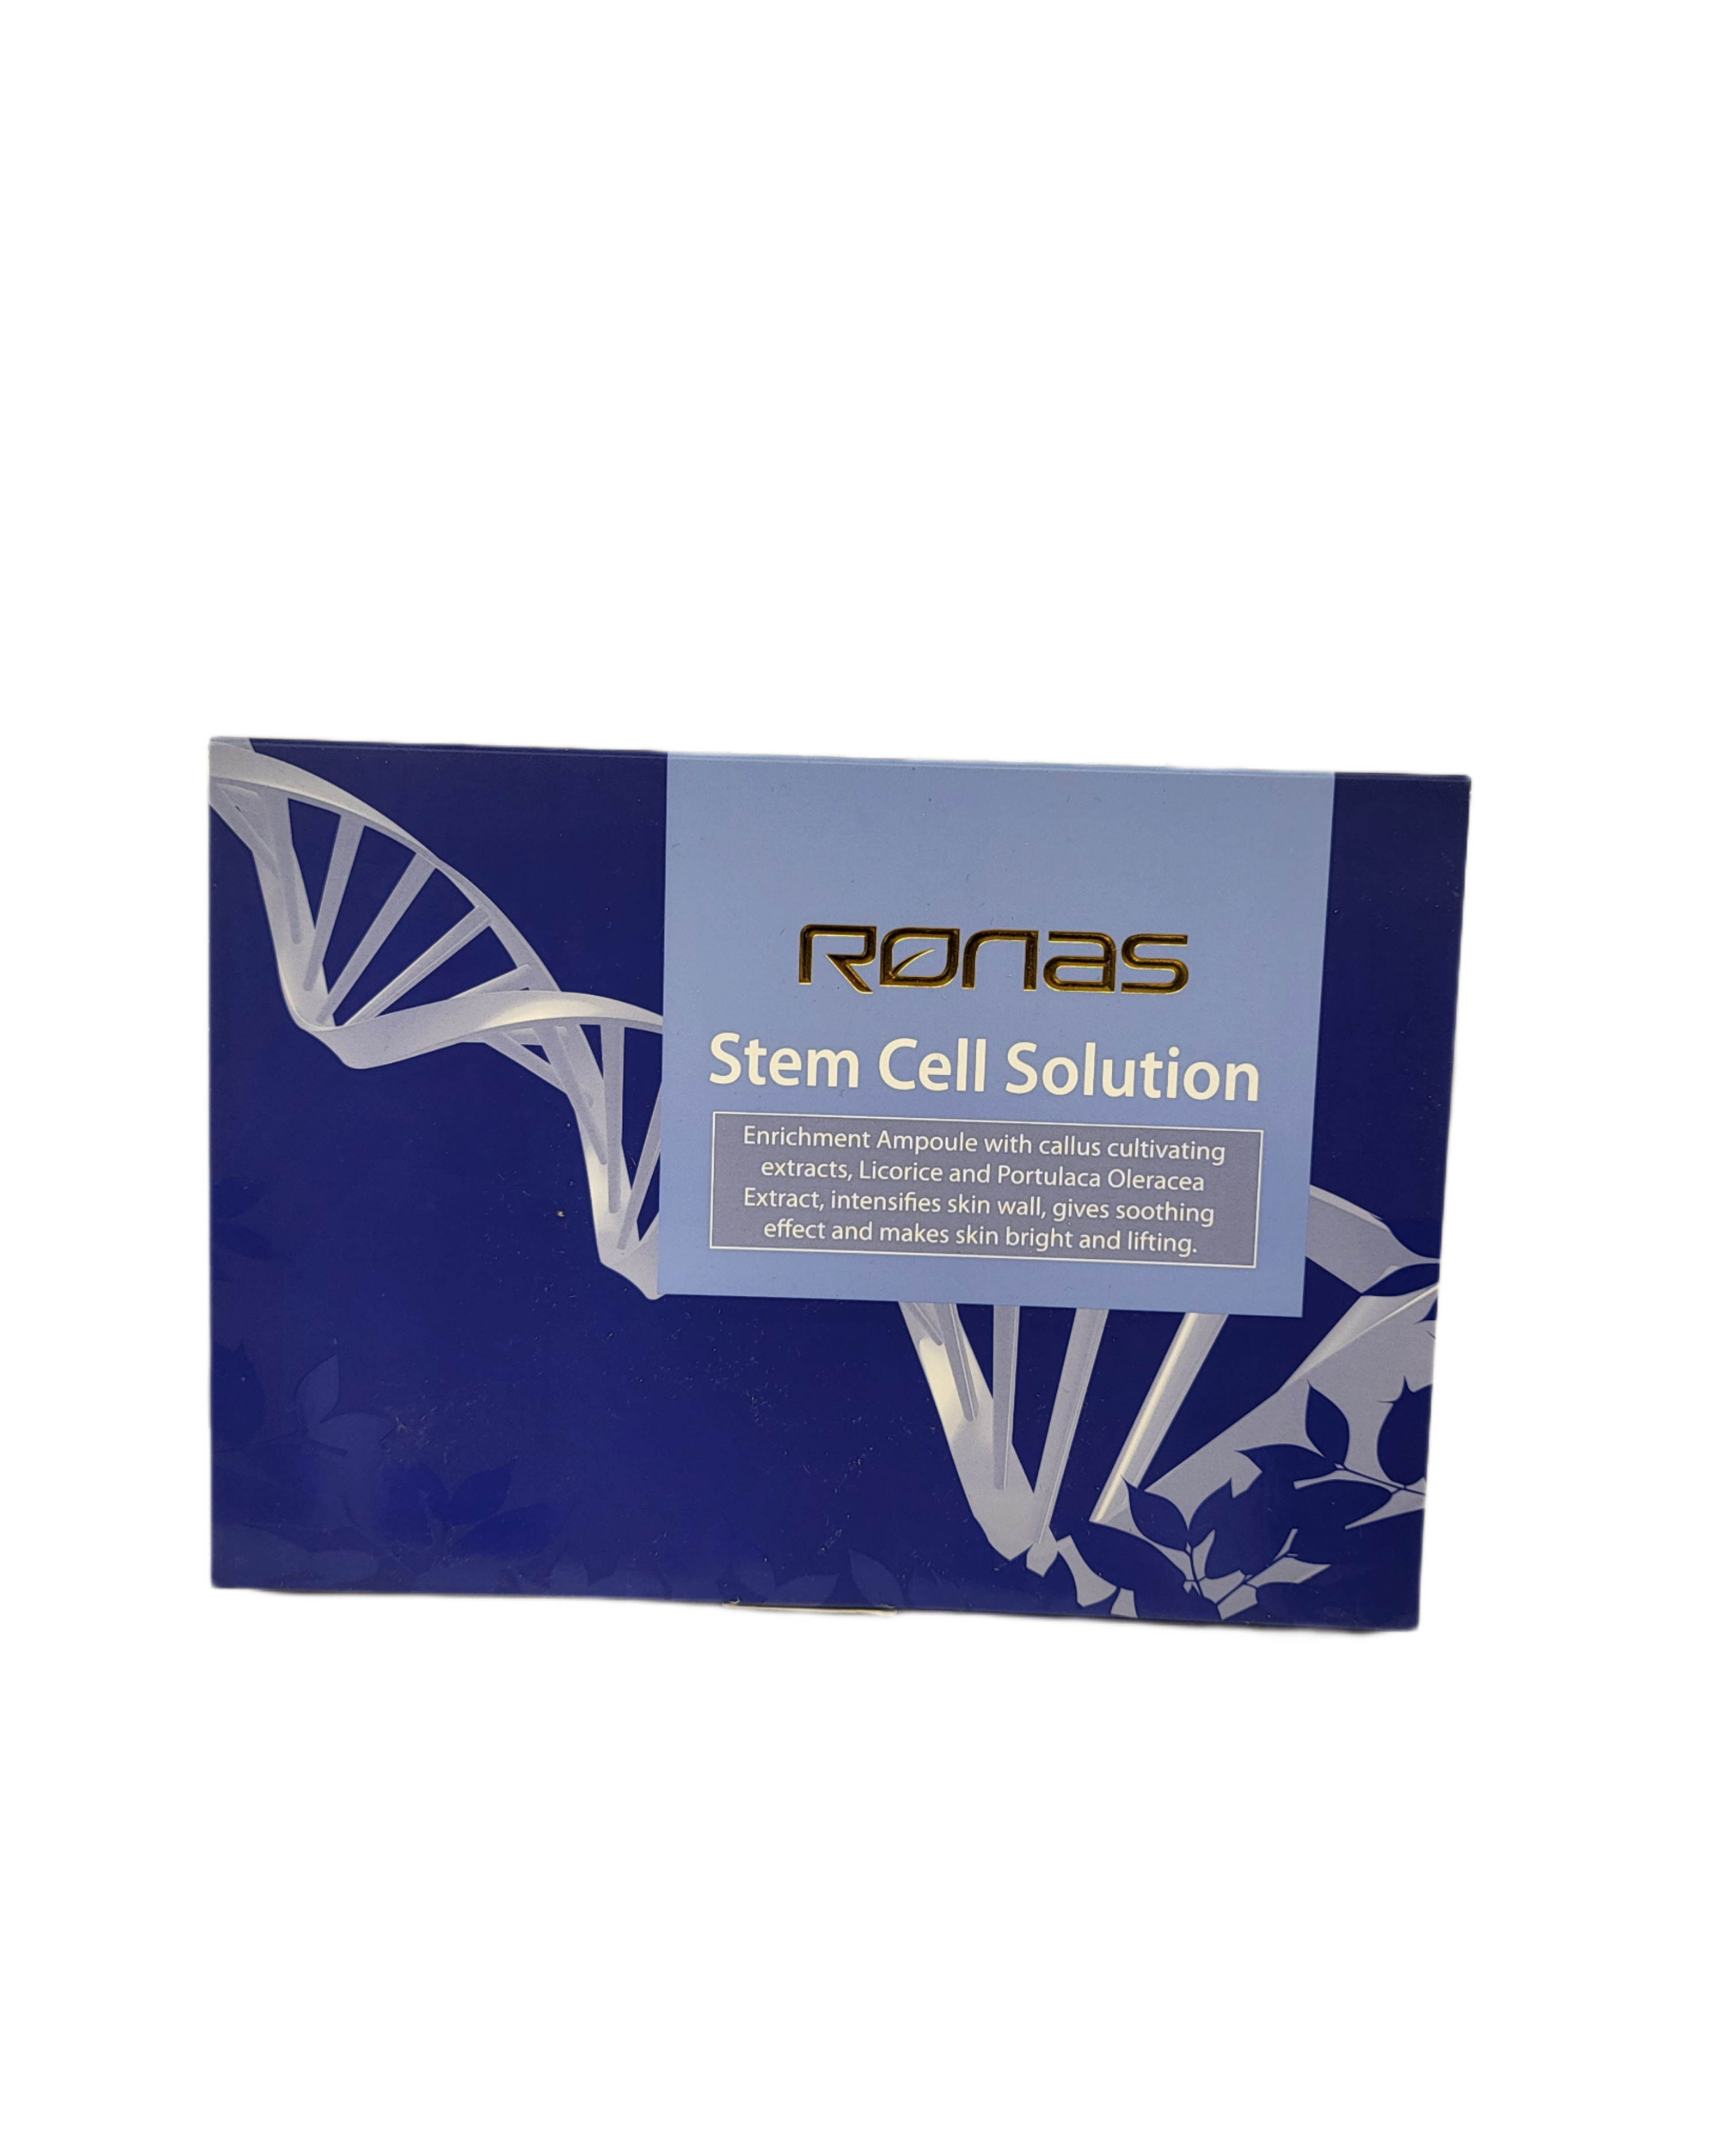 RONAS Stem Cell Solution 5ml x 10 vial